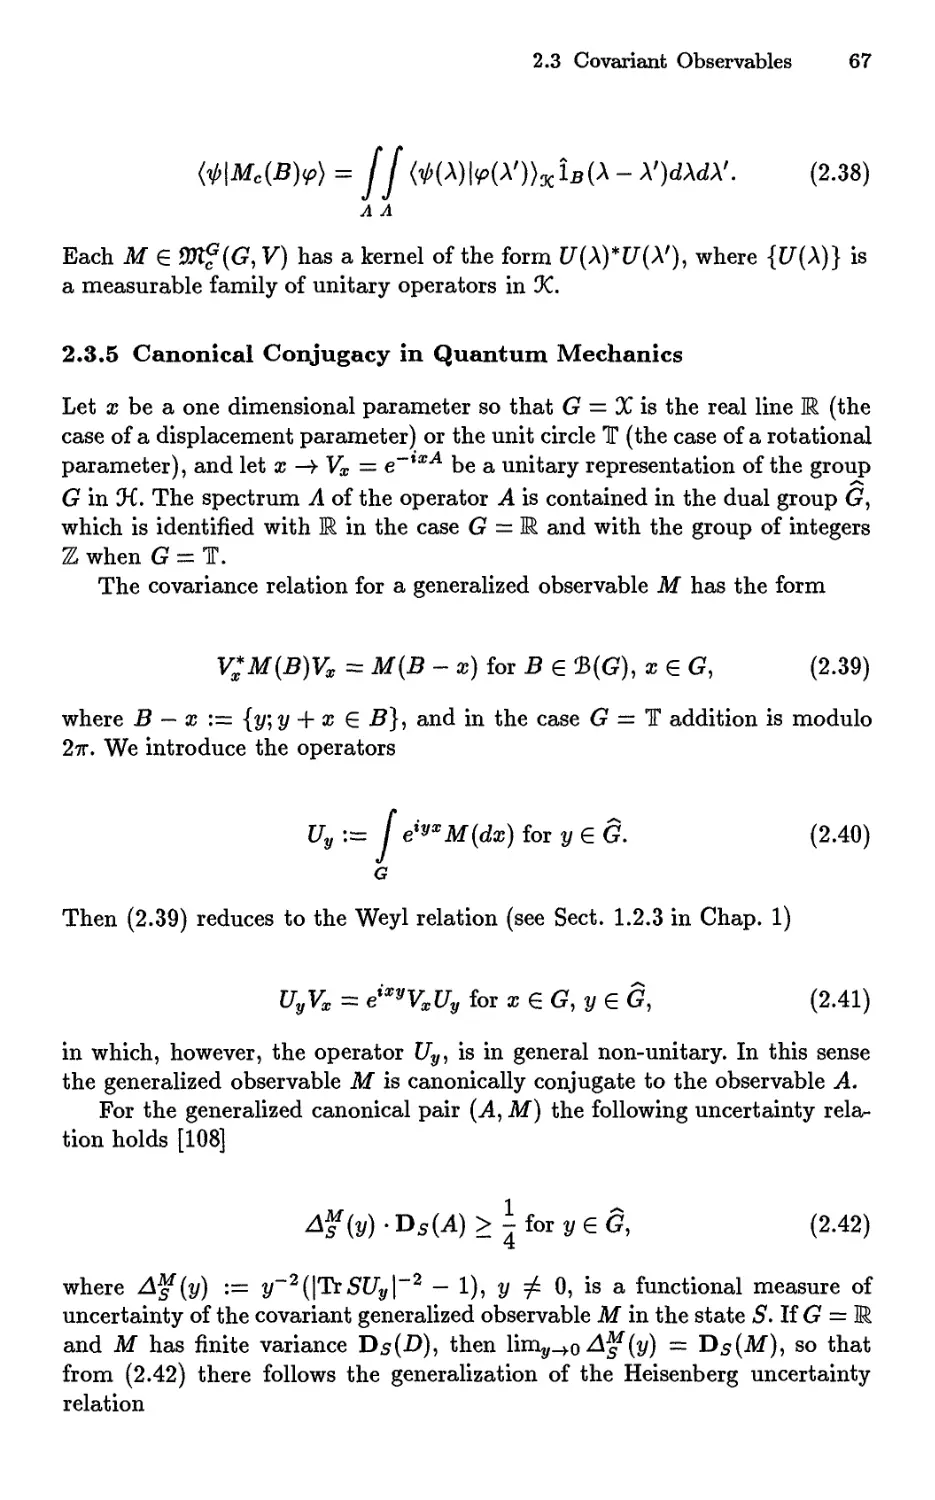 2.3.5 Canonical CoWugacy in Quantum Mechanics